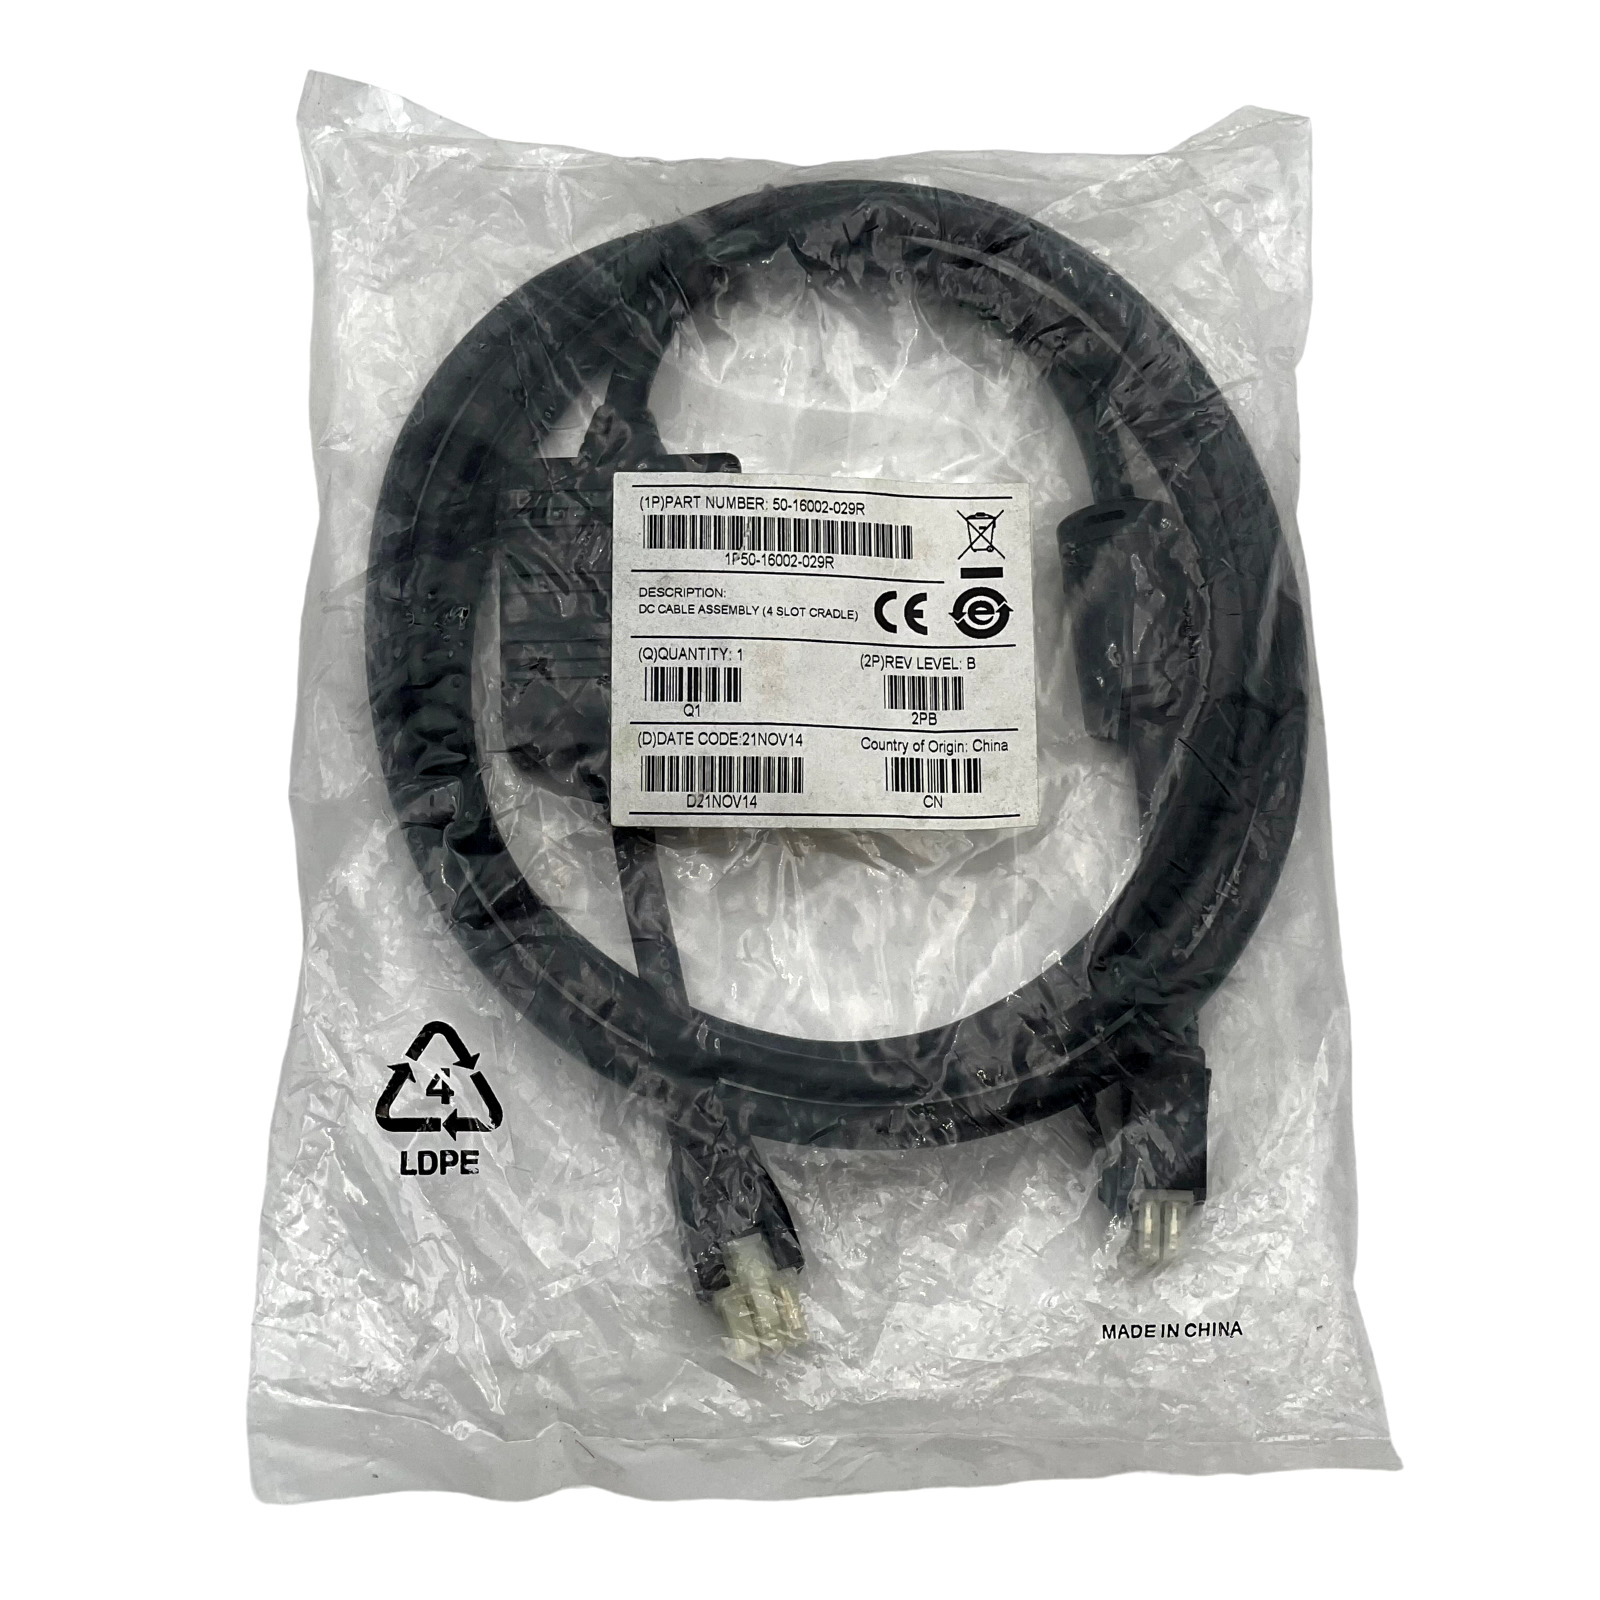 Motorola Symbol 50-16002-029R Power Cable Assembly Zebra DC Line Cord